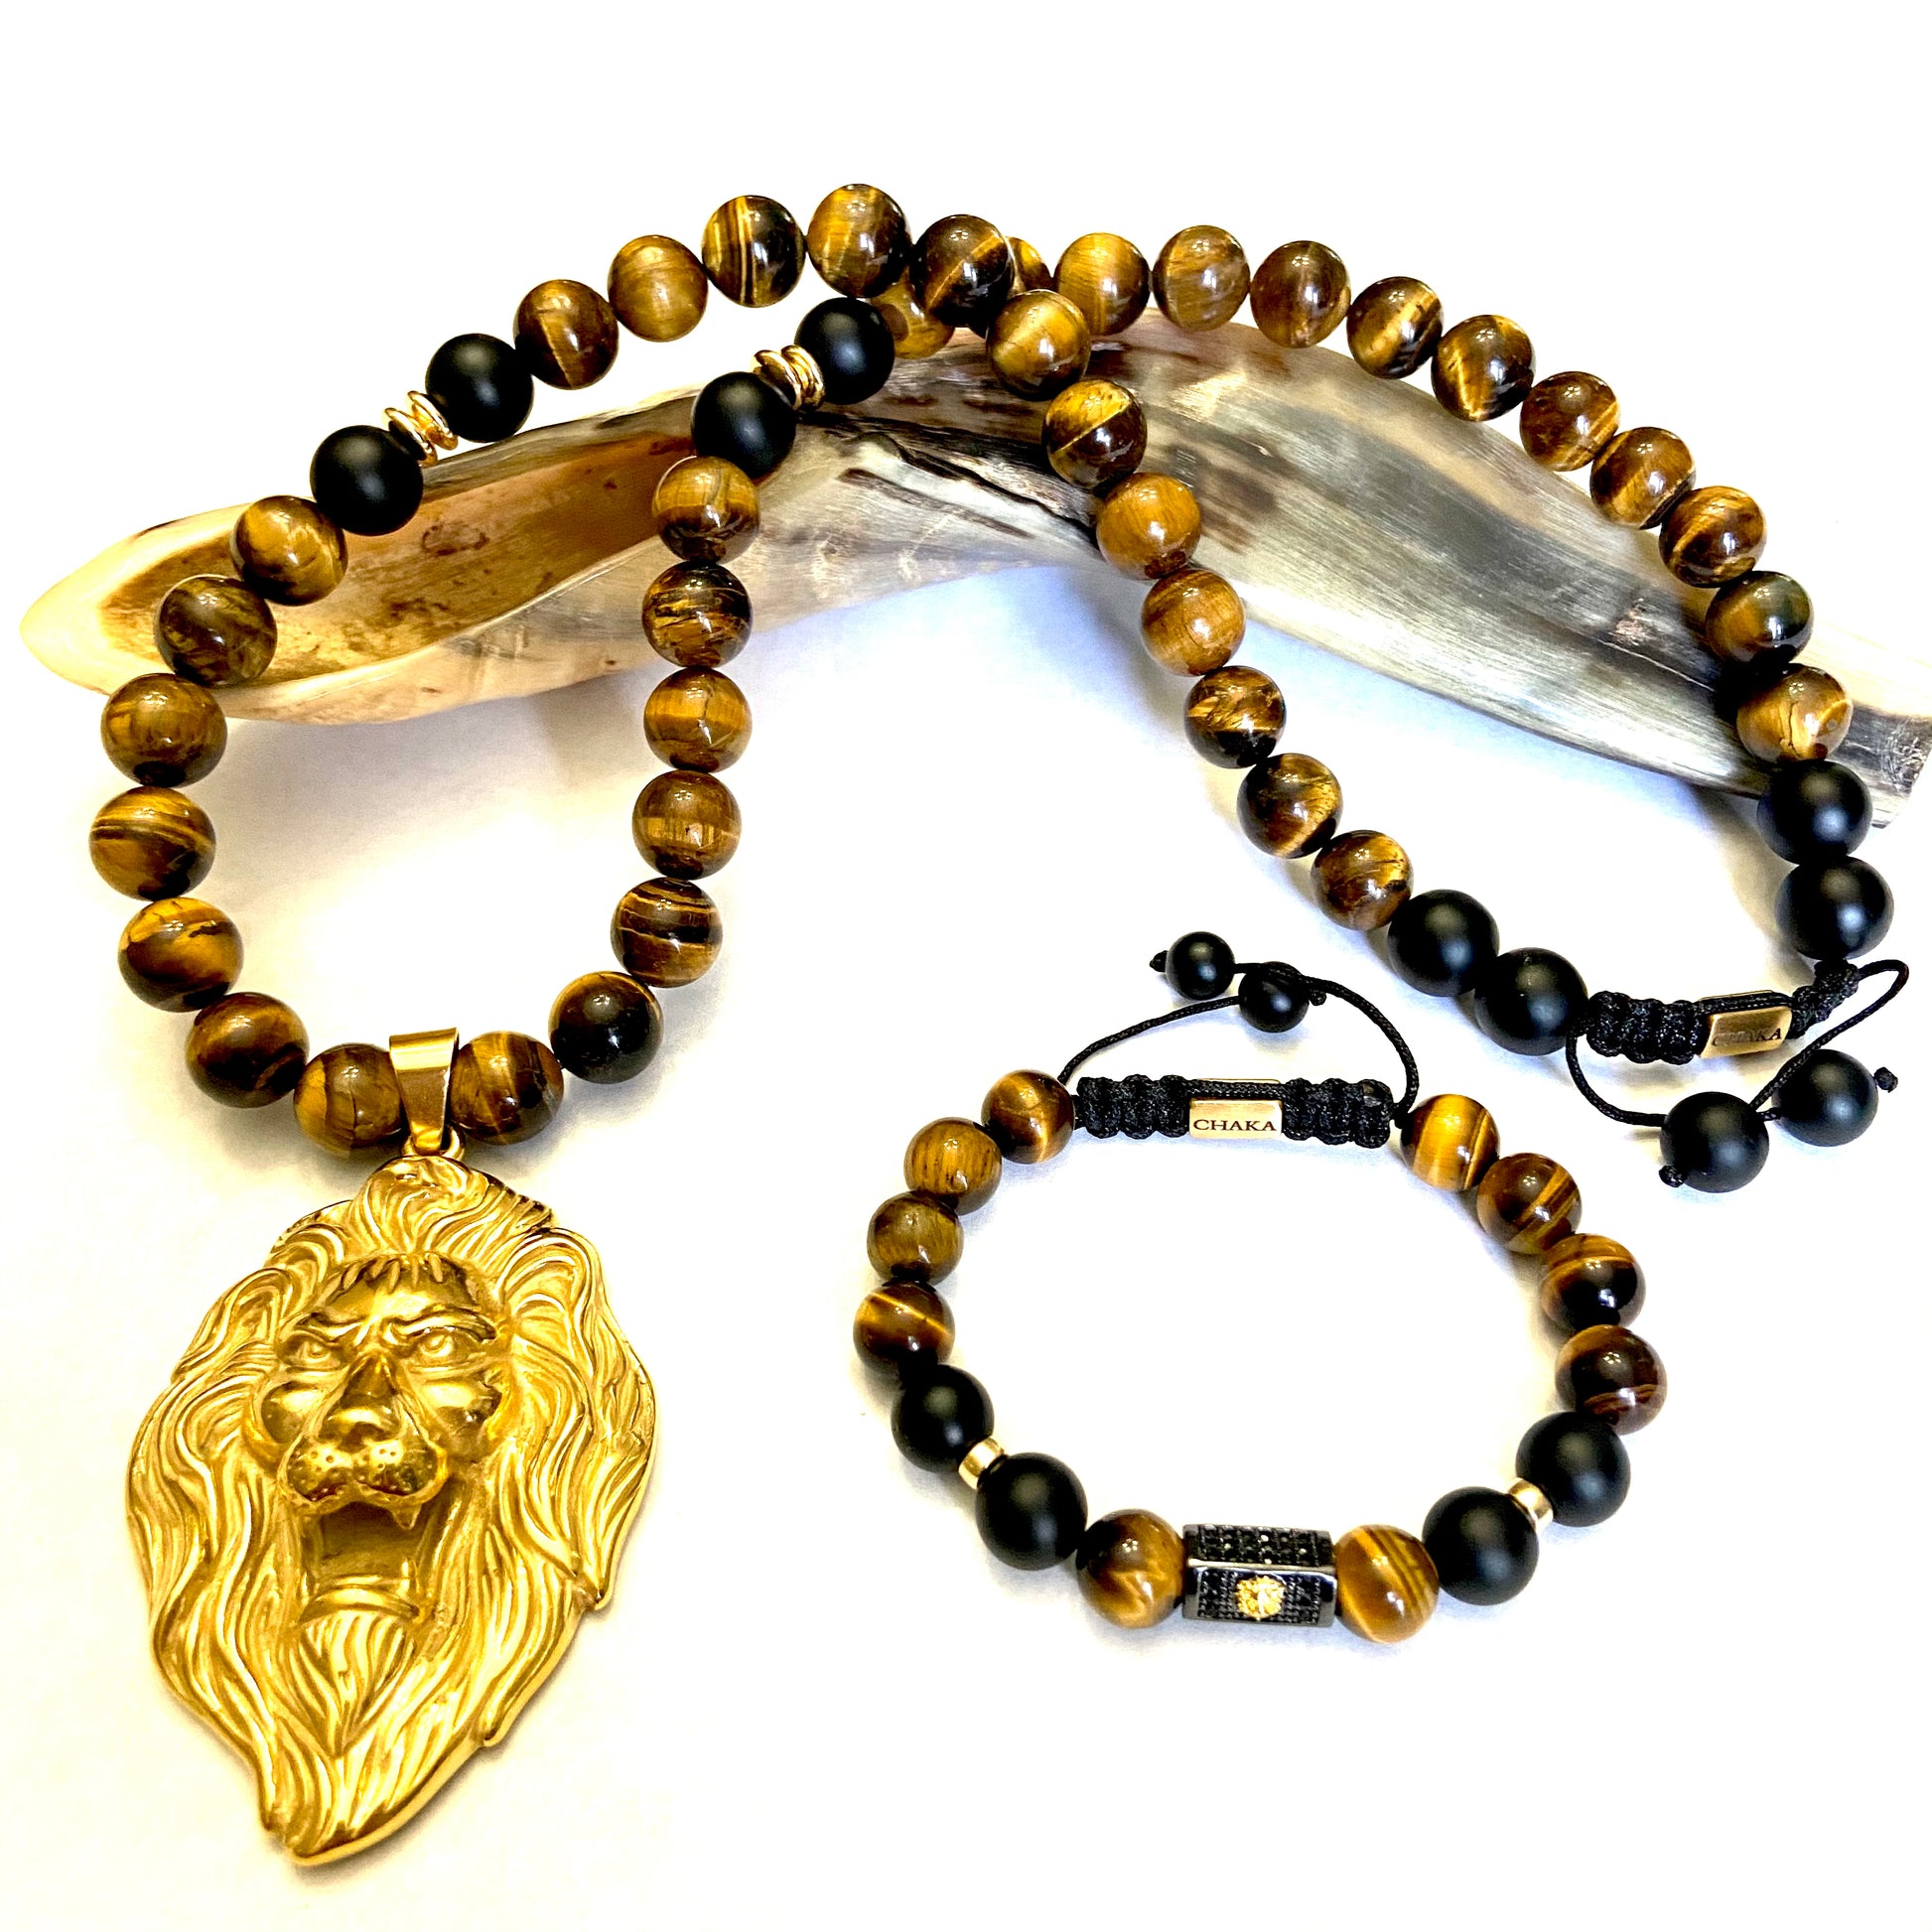 Copy of XL Tiger Eye Matte Judah Lion Onyx Necklace Chaka Beads